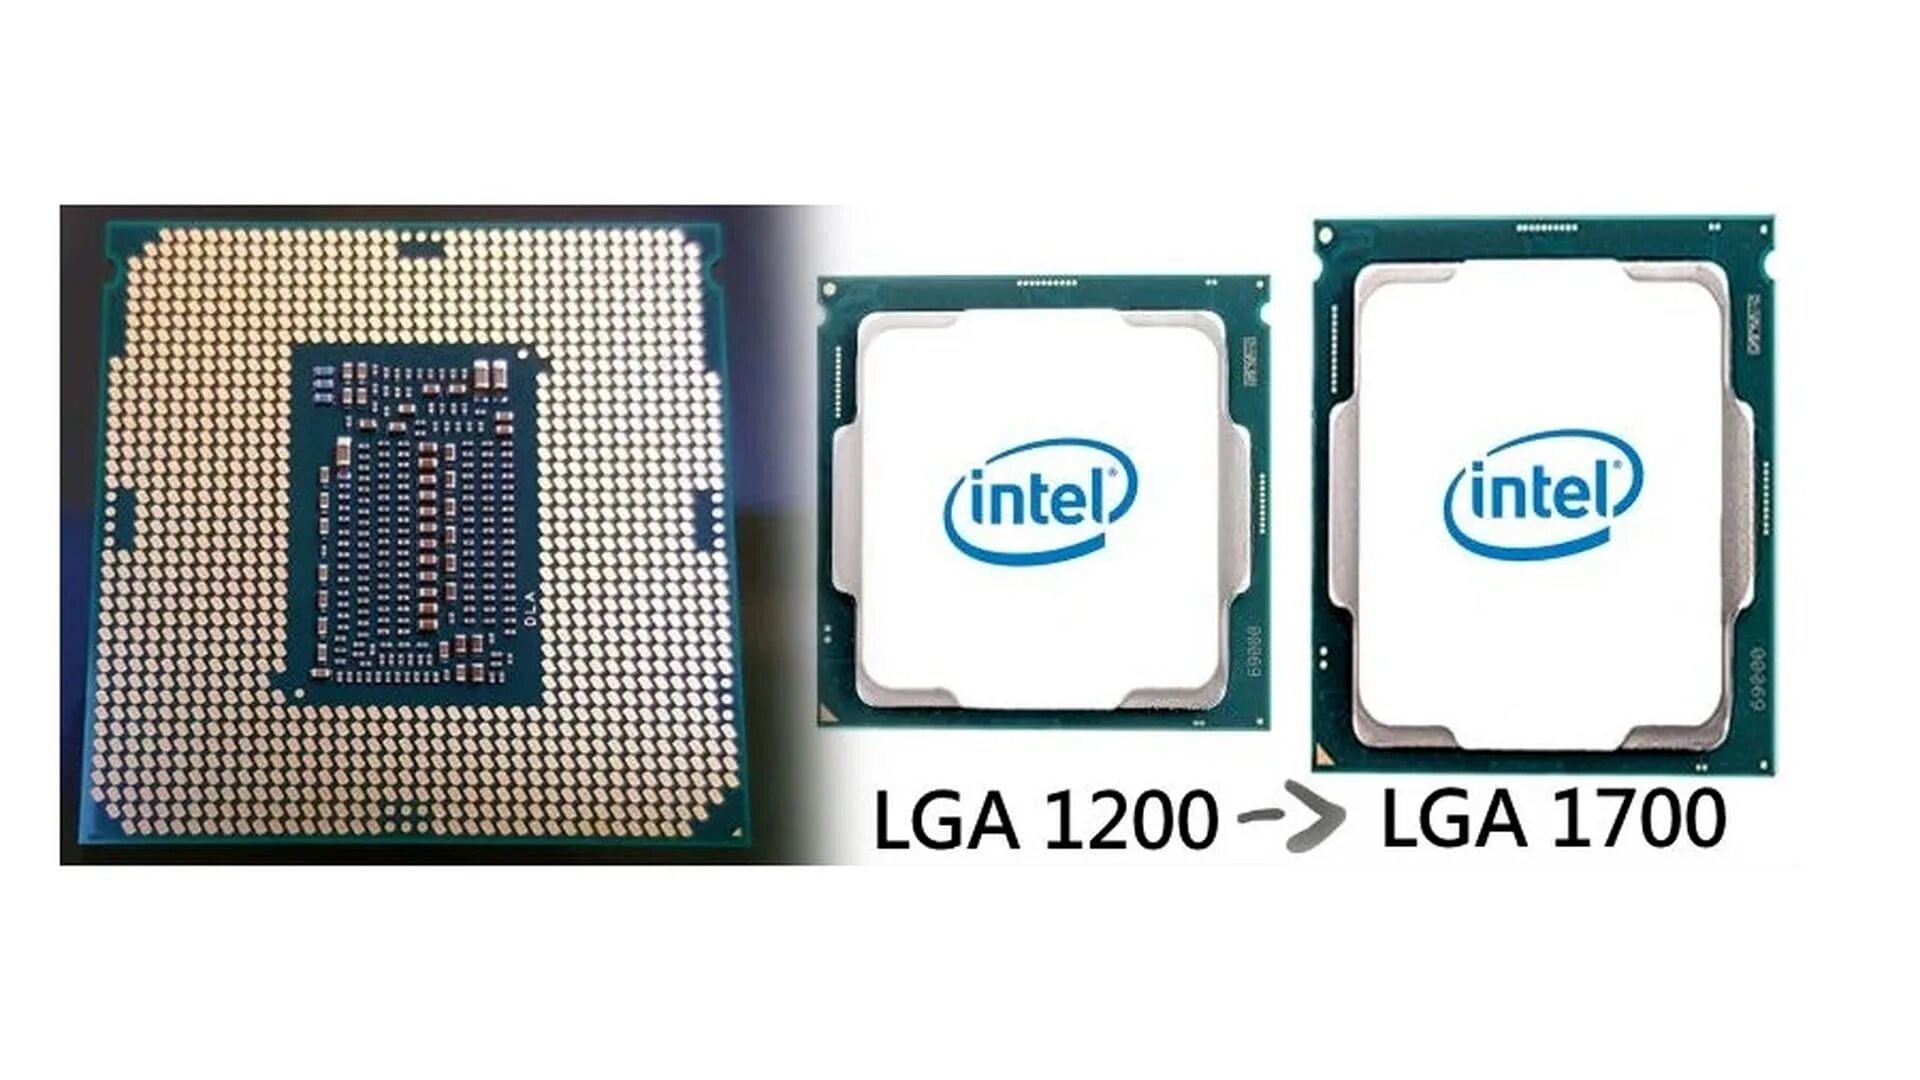 Intel i5 lga 1700. Сокет Интел 1700. LGA 1700 процессоры Intel. LGA 1700 vs LGA 1200 процессор. Сокет Интел лга 1700.